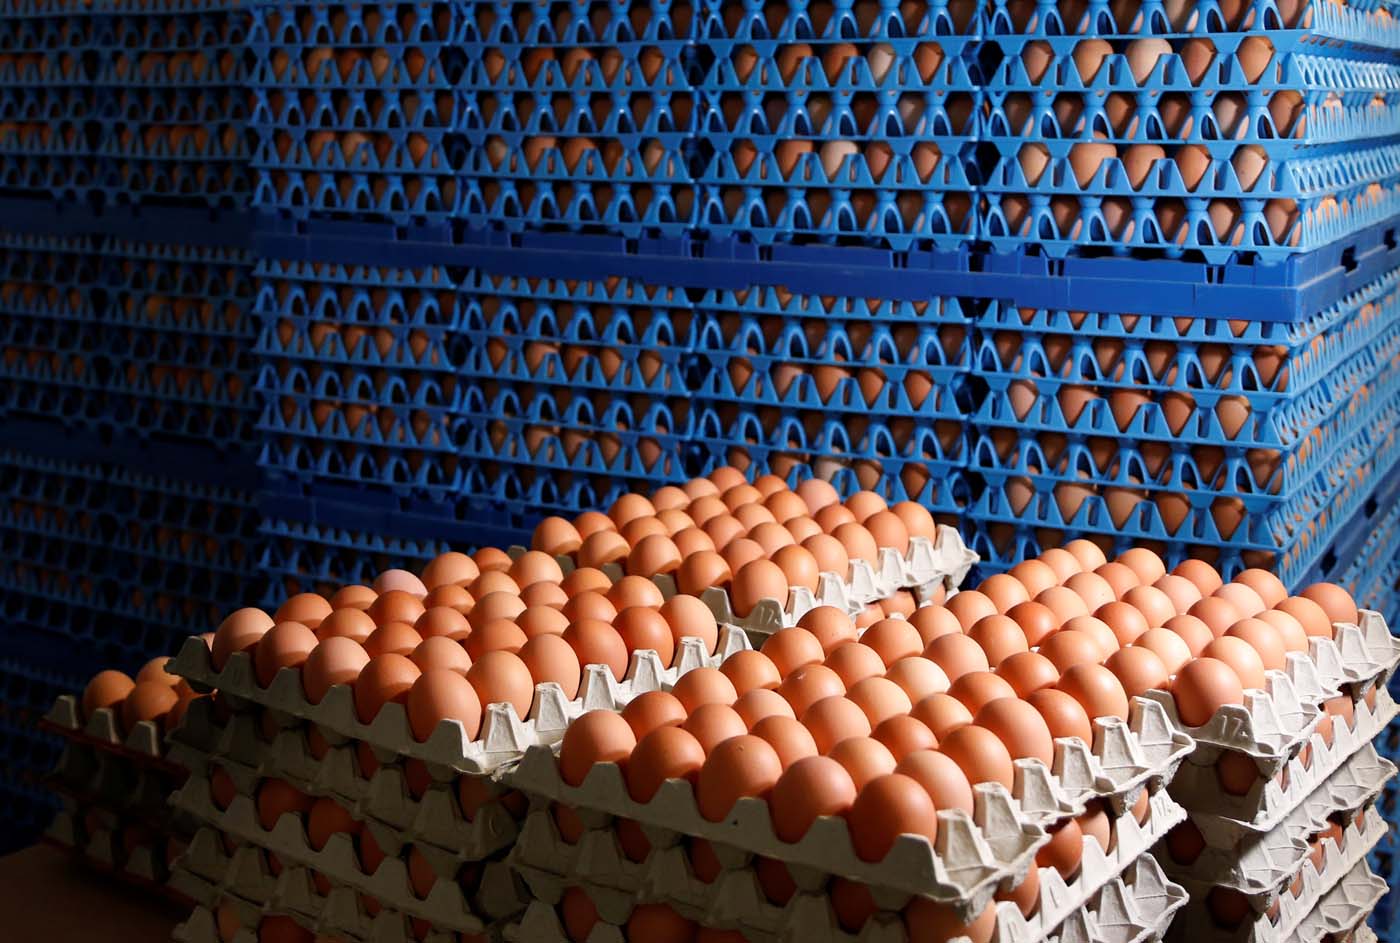 Europa acelera investigación de huevos contaminados; nueve países afectados